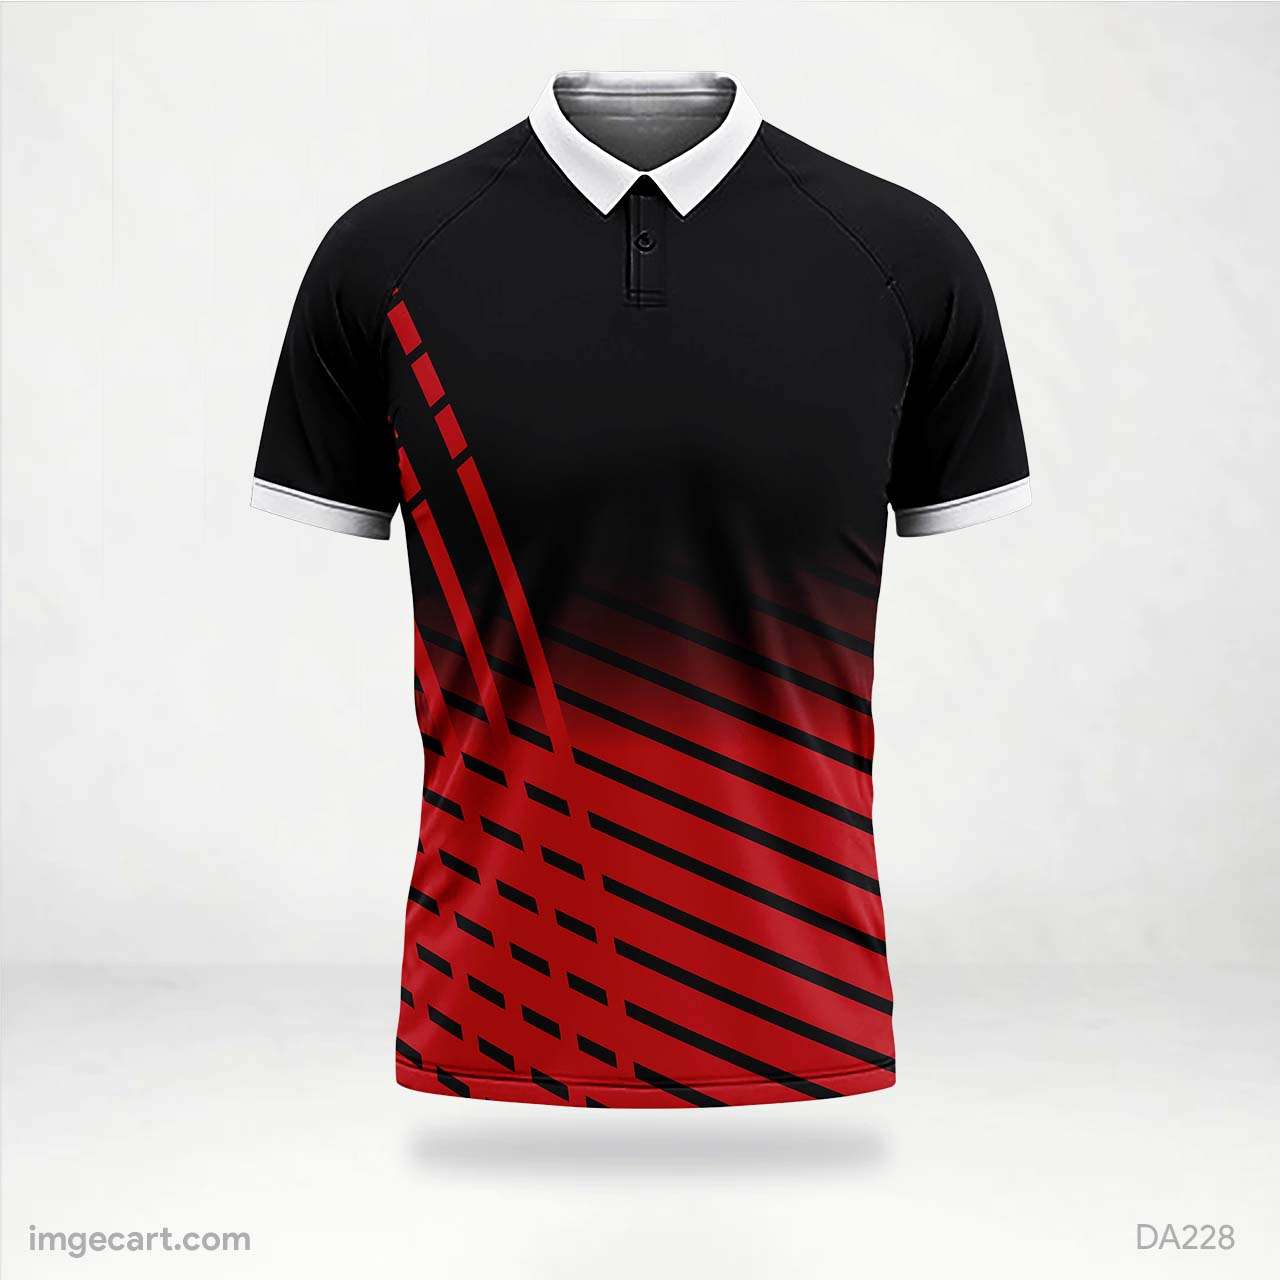 Cricket Jersey Design Black with red - imgecart